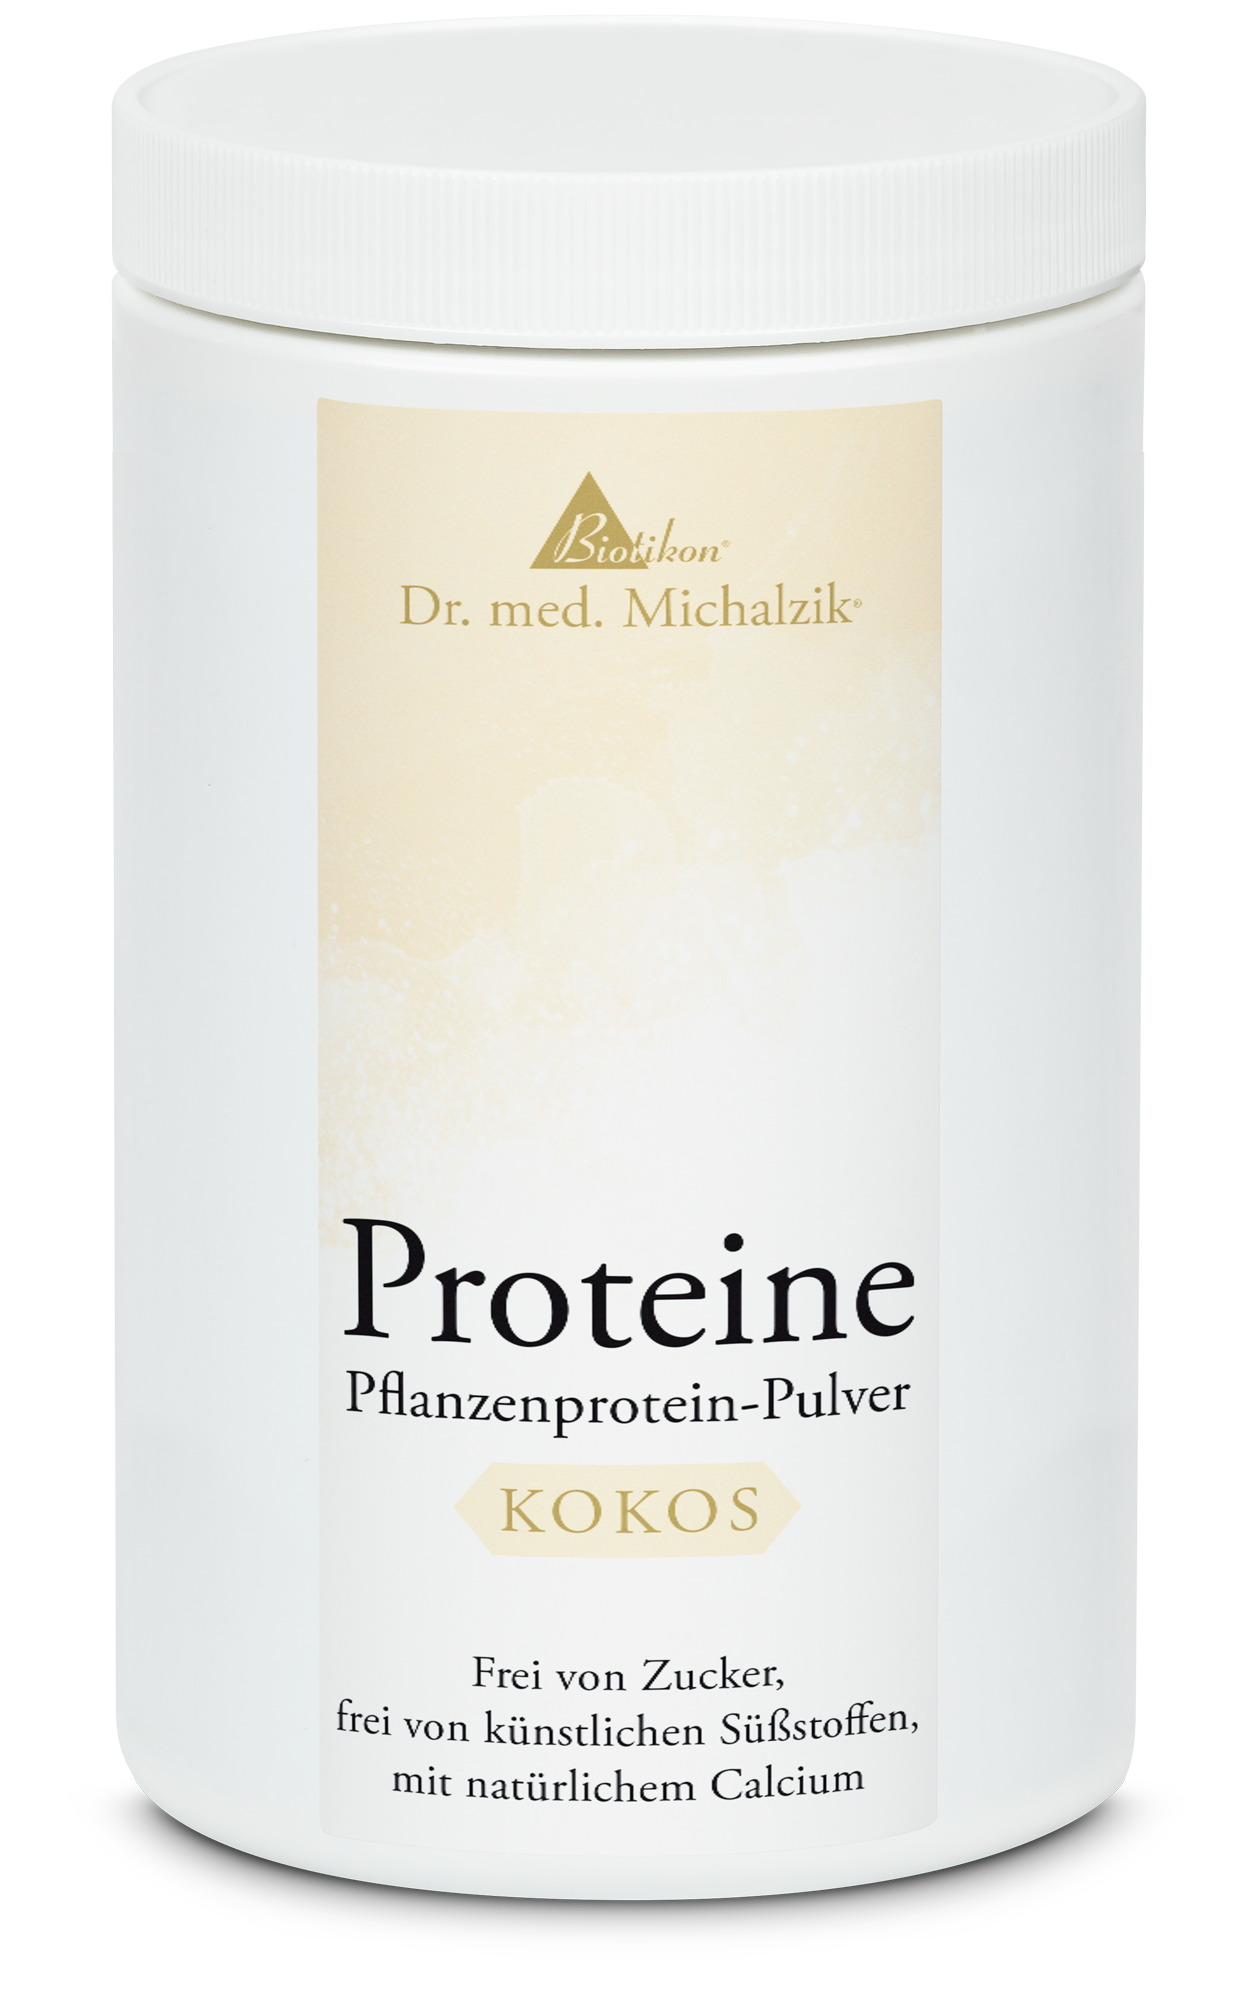 Proteine - Noce di cocco gustose di Dr. med. Michalzik